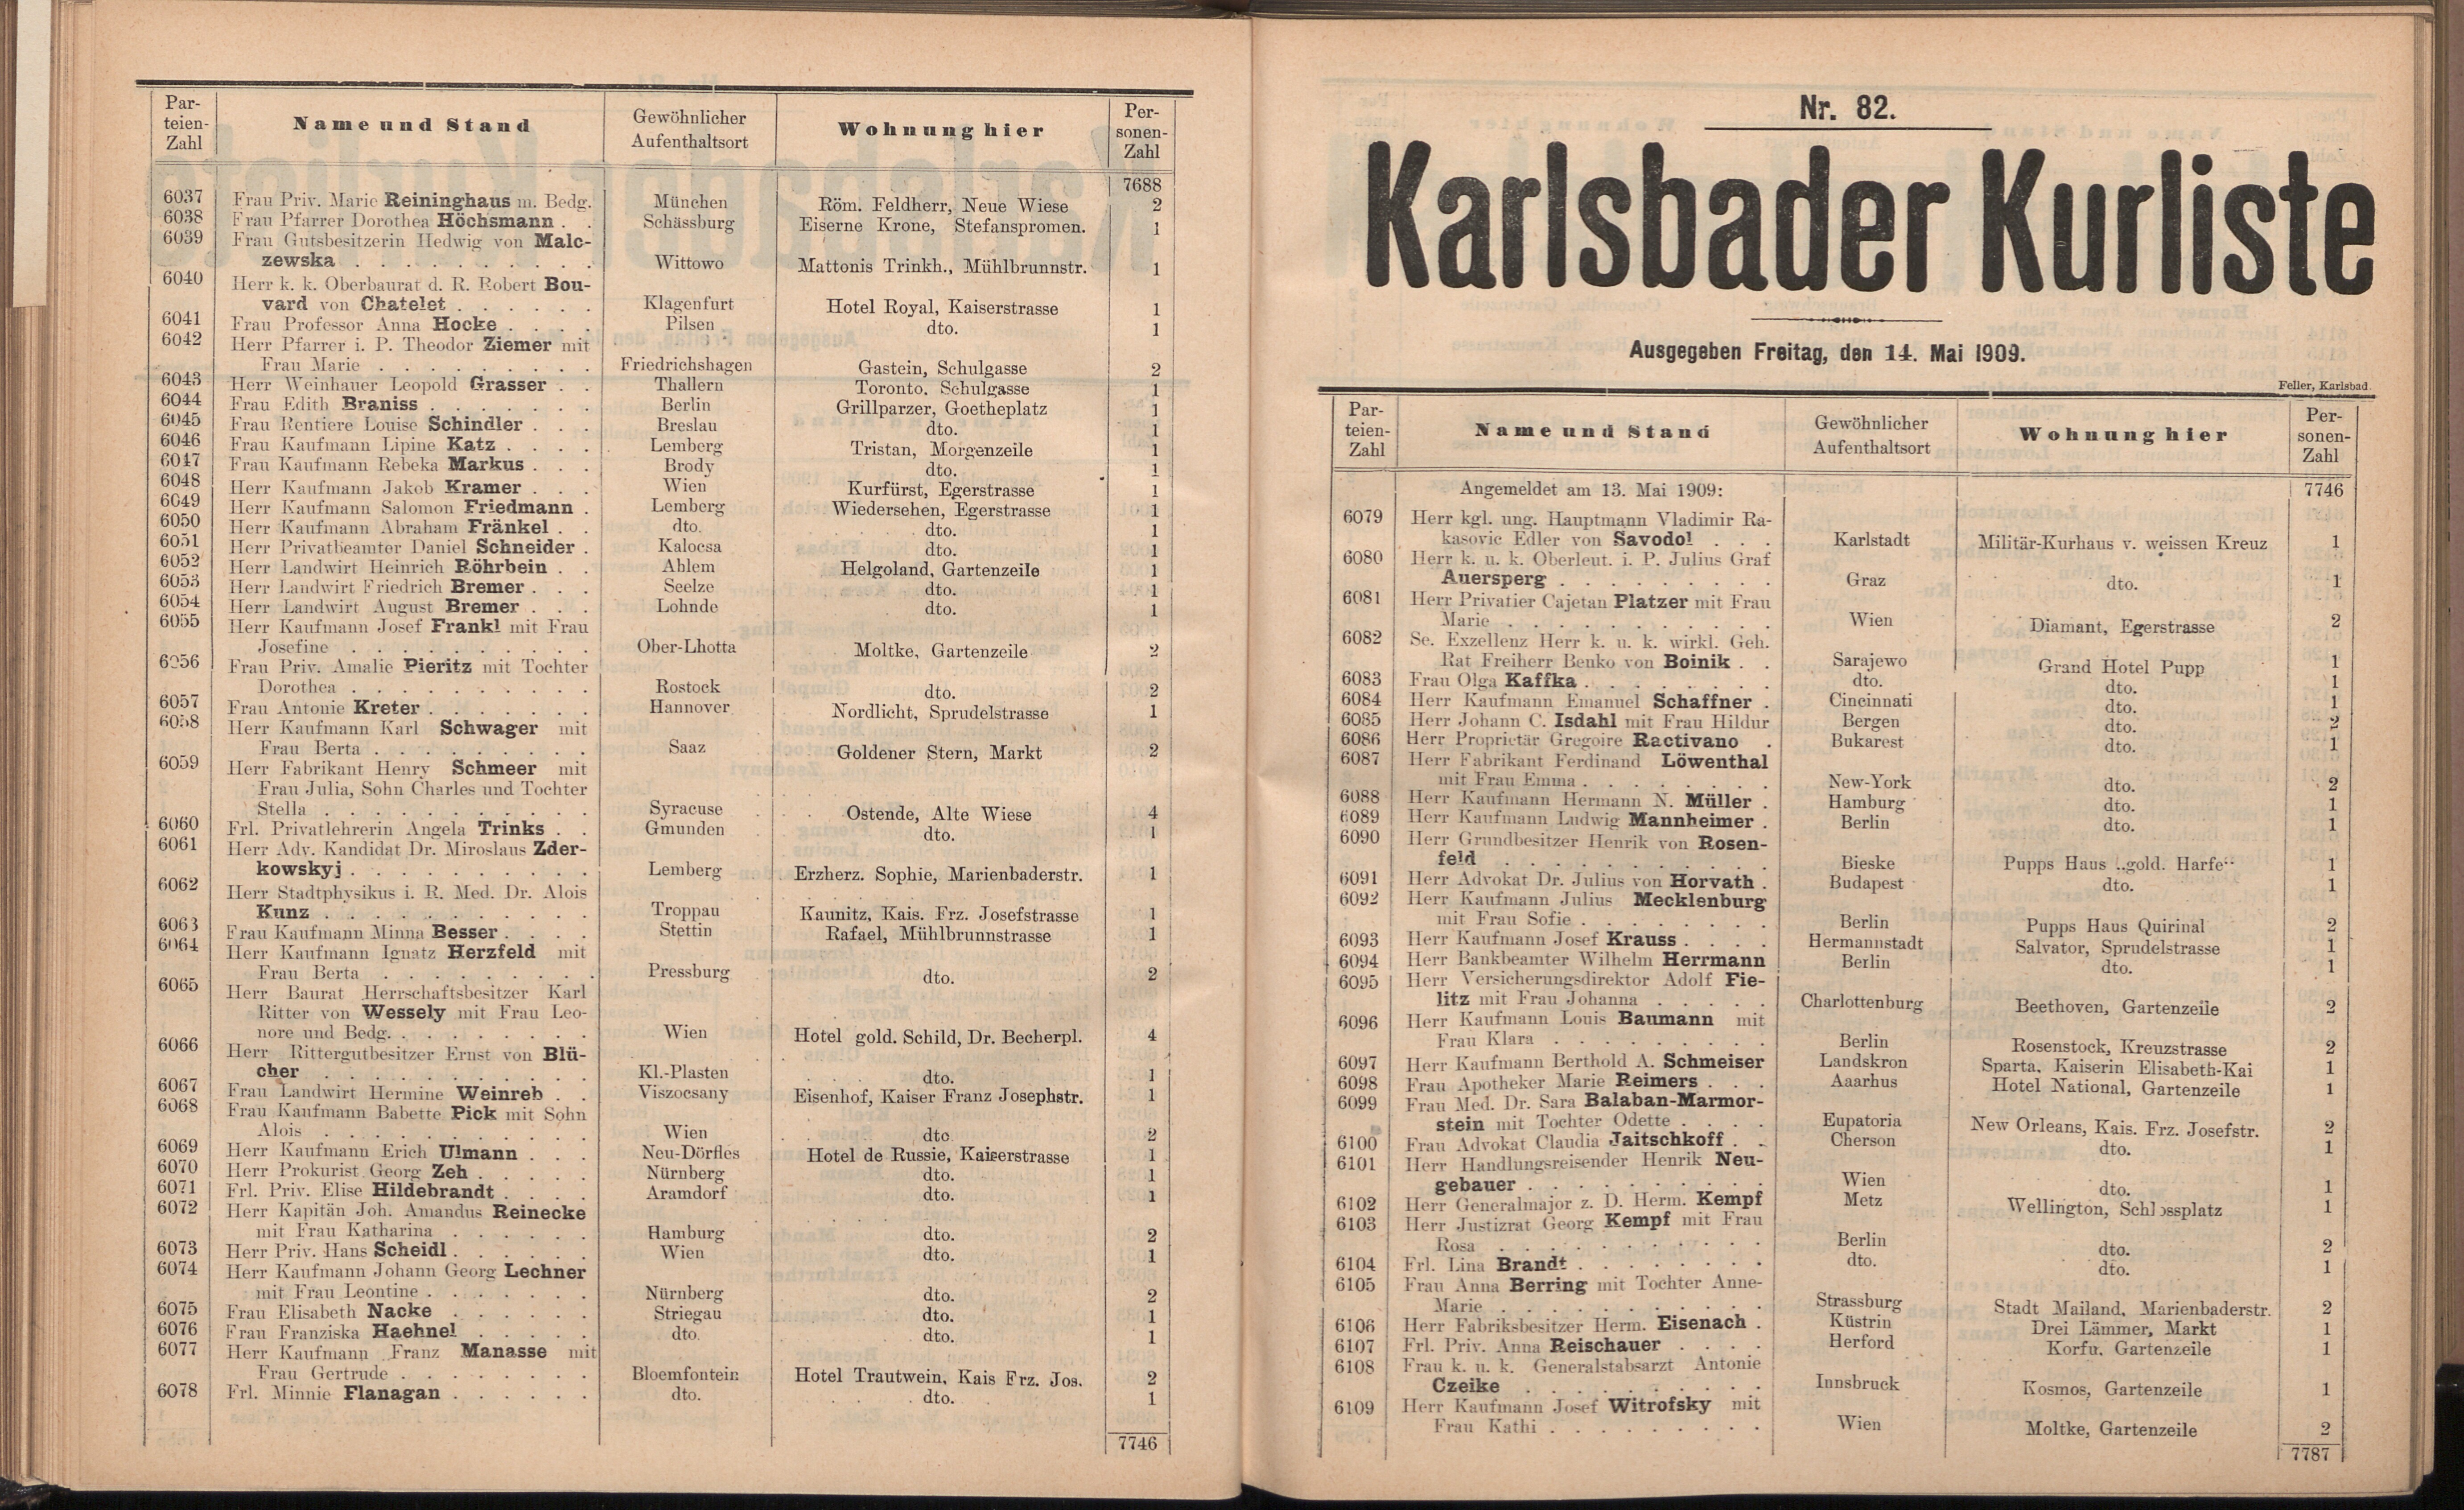 198. soap-kv_knihovna_karlsbader-kurliste-1909_1980